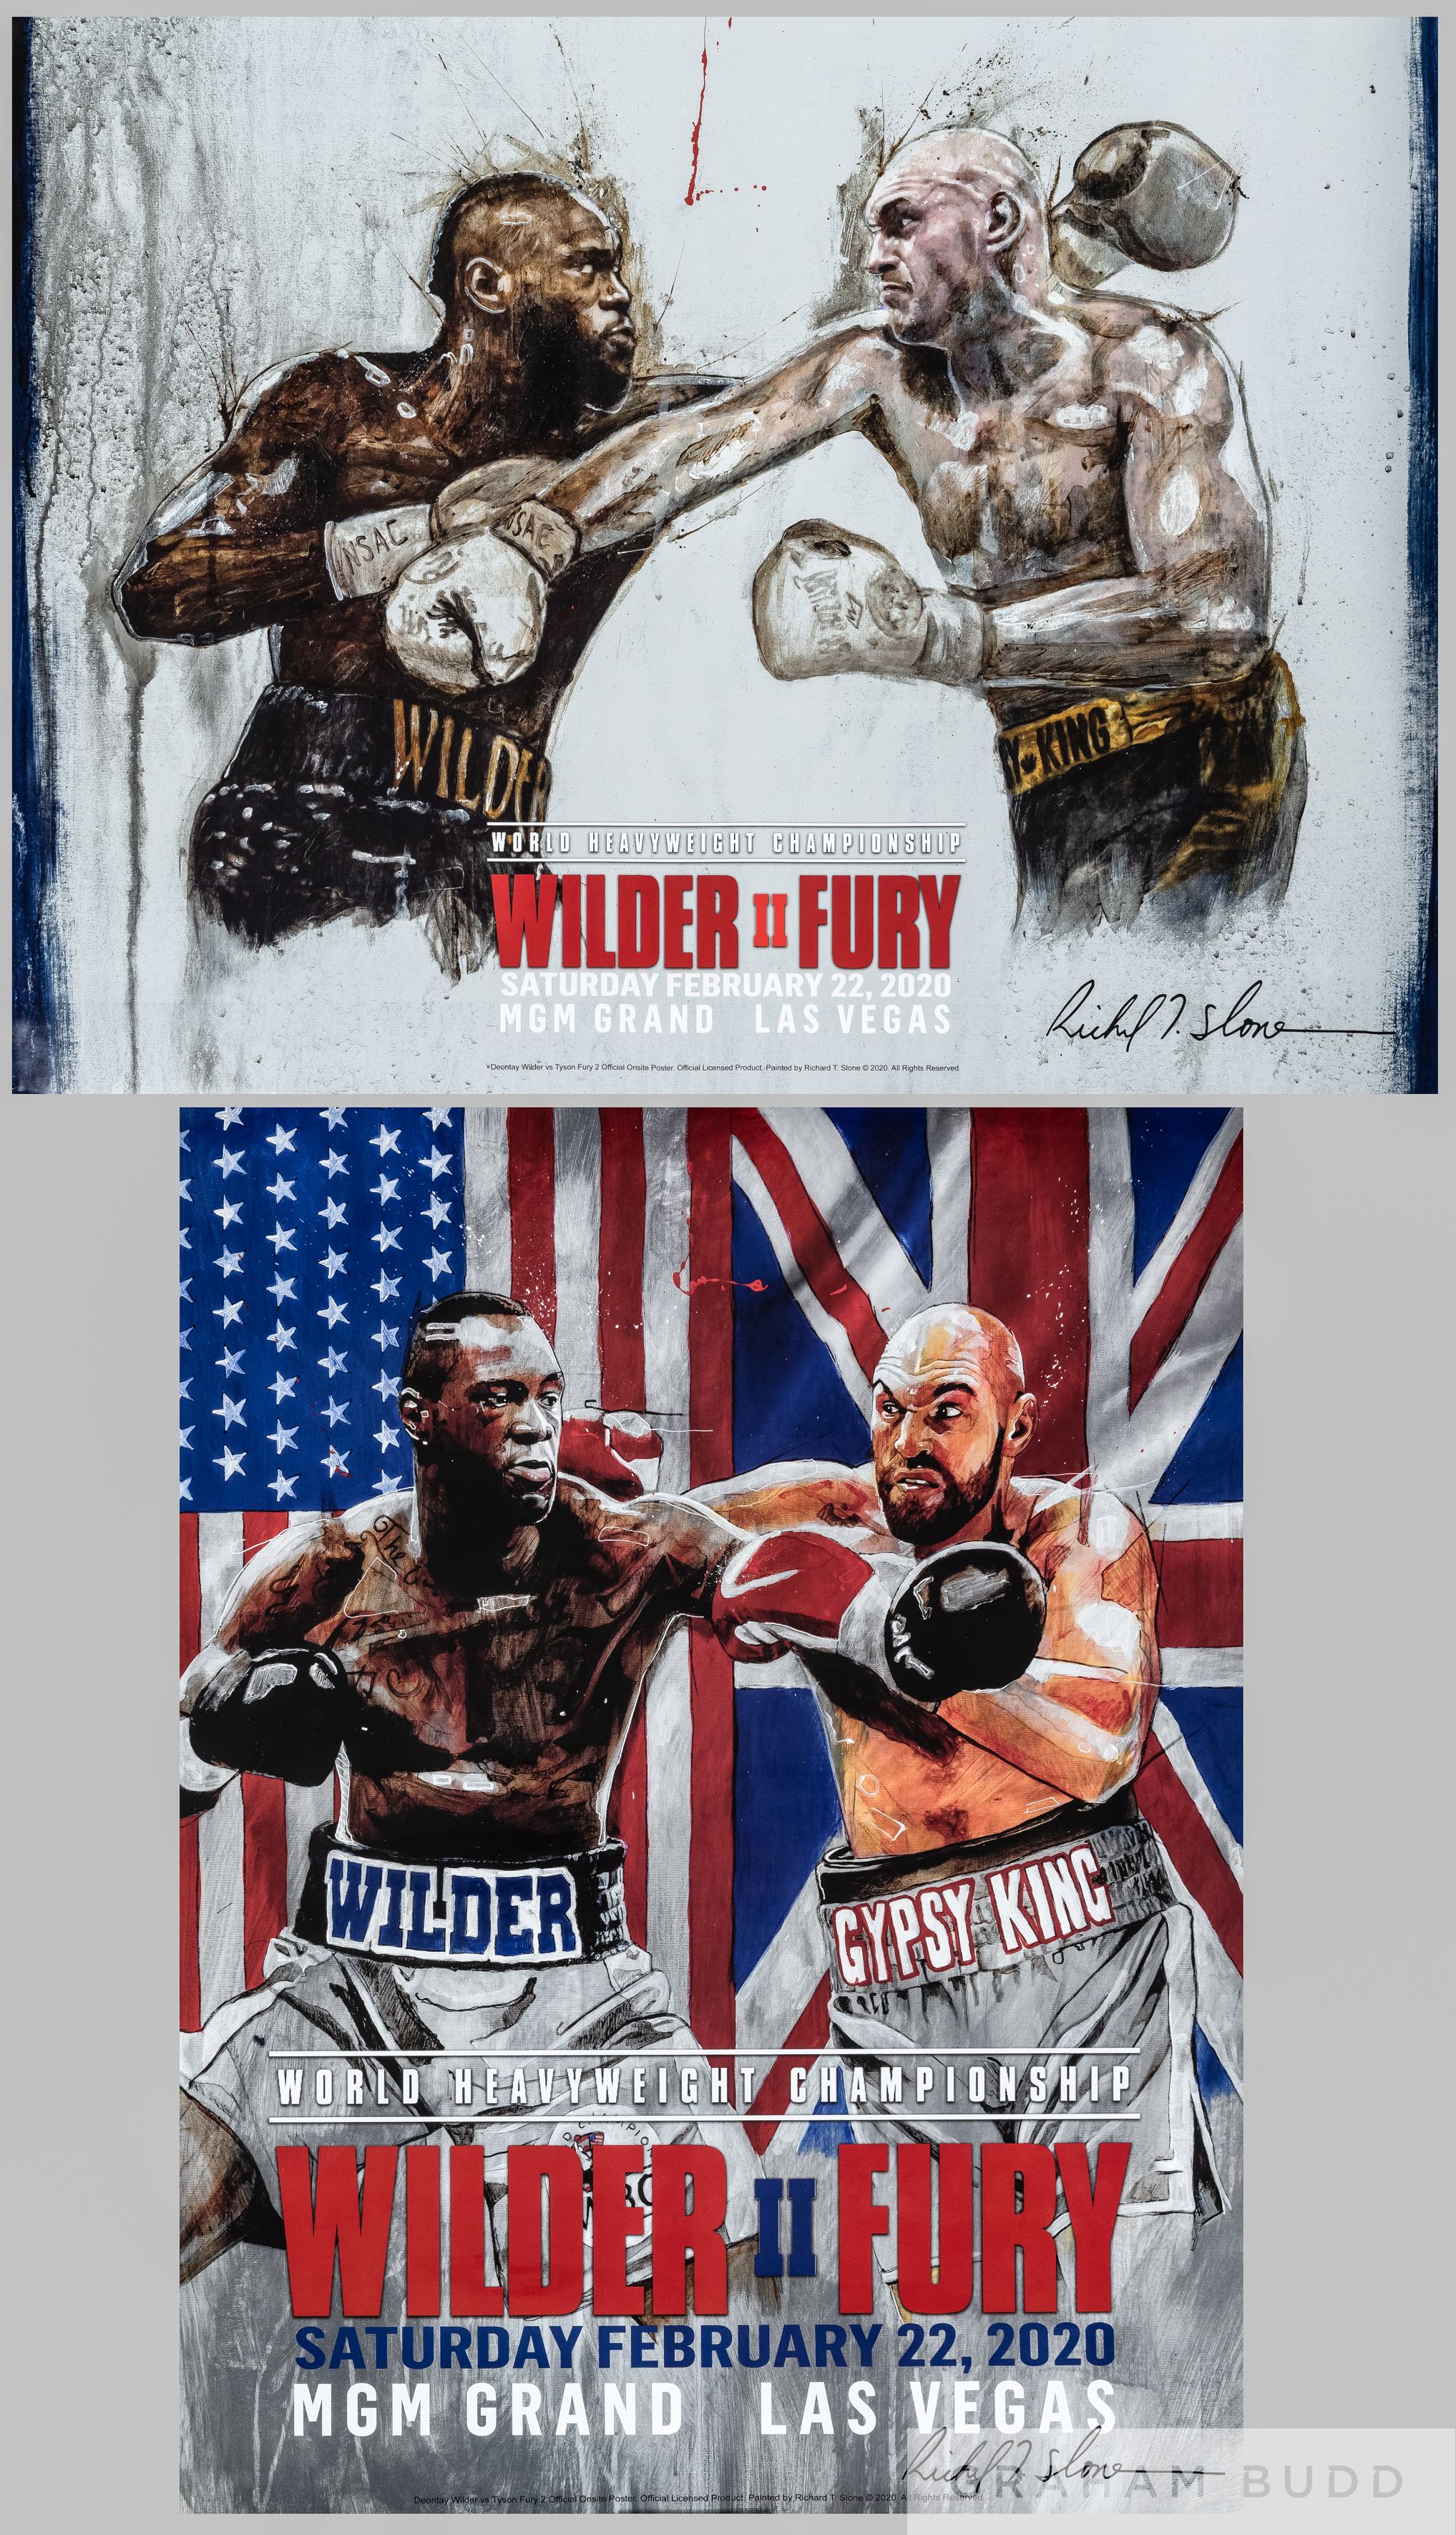 Deontay Wilder v. Tyson Fury II fight poster